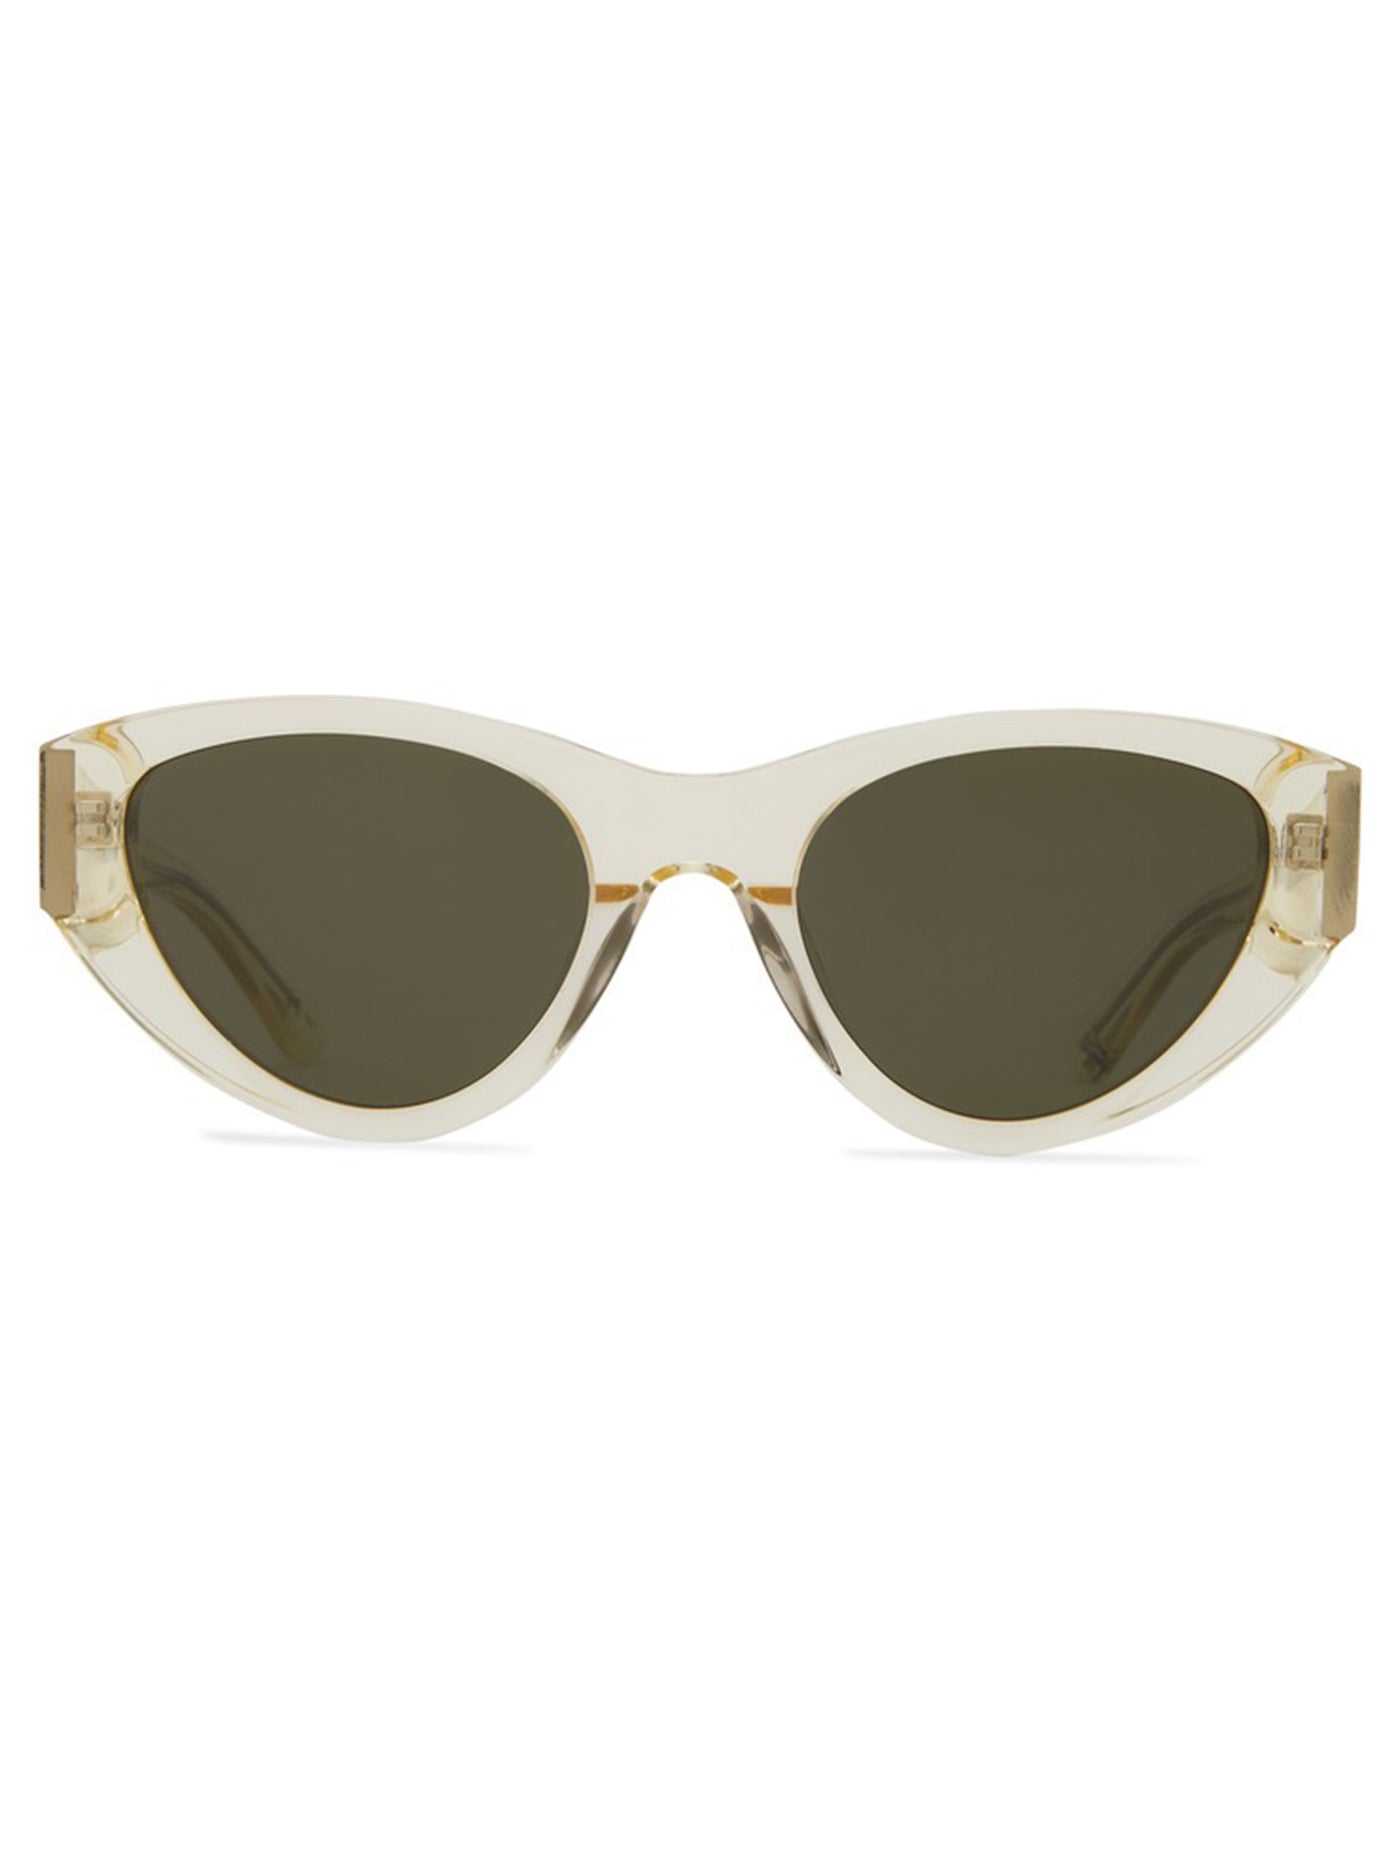 Von Zipper Dora Champagne Trans/Vintage Grey Sunglasses